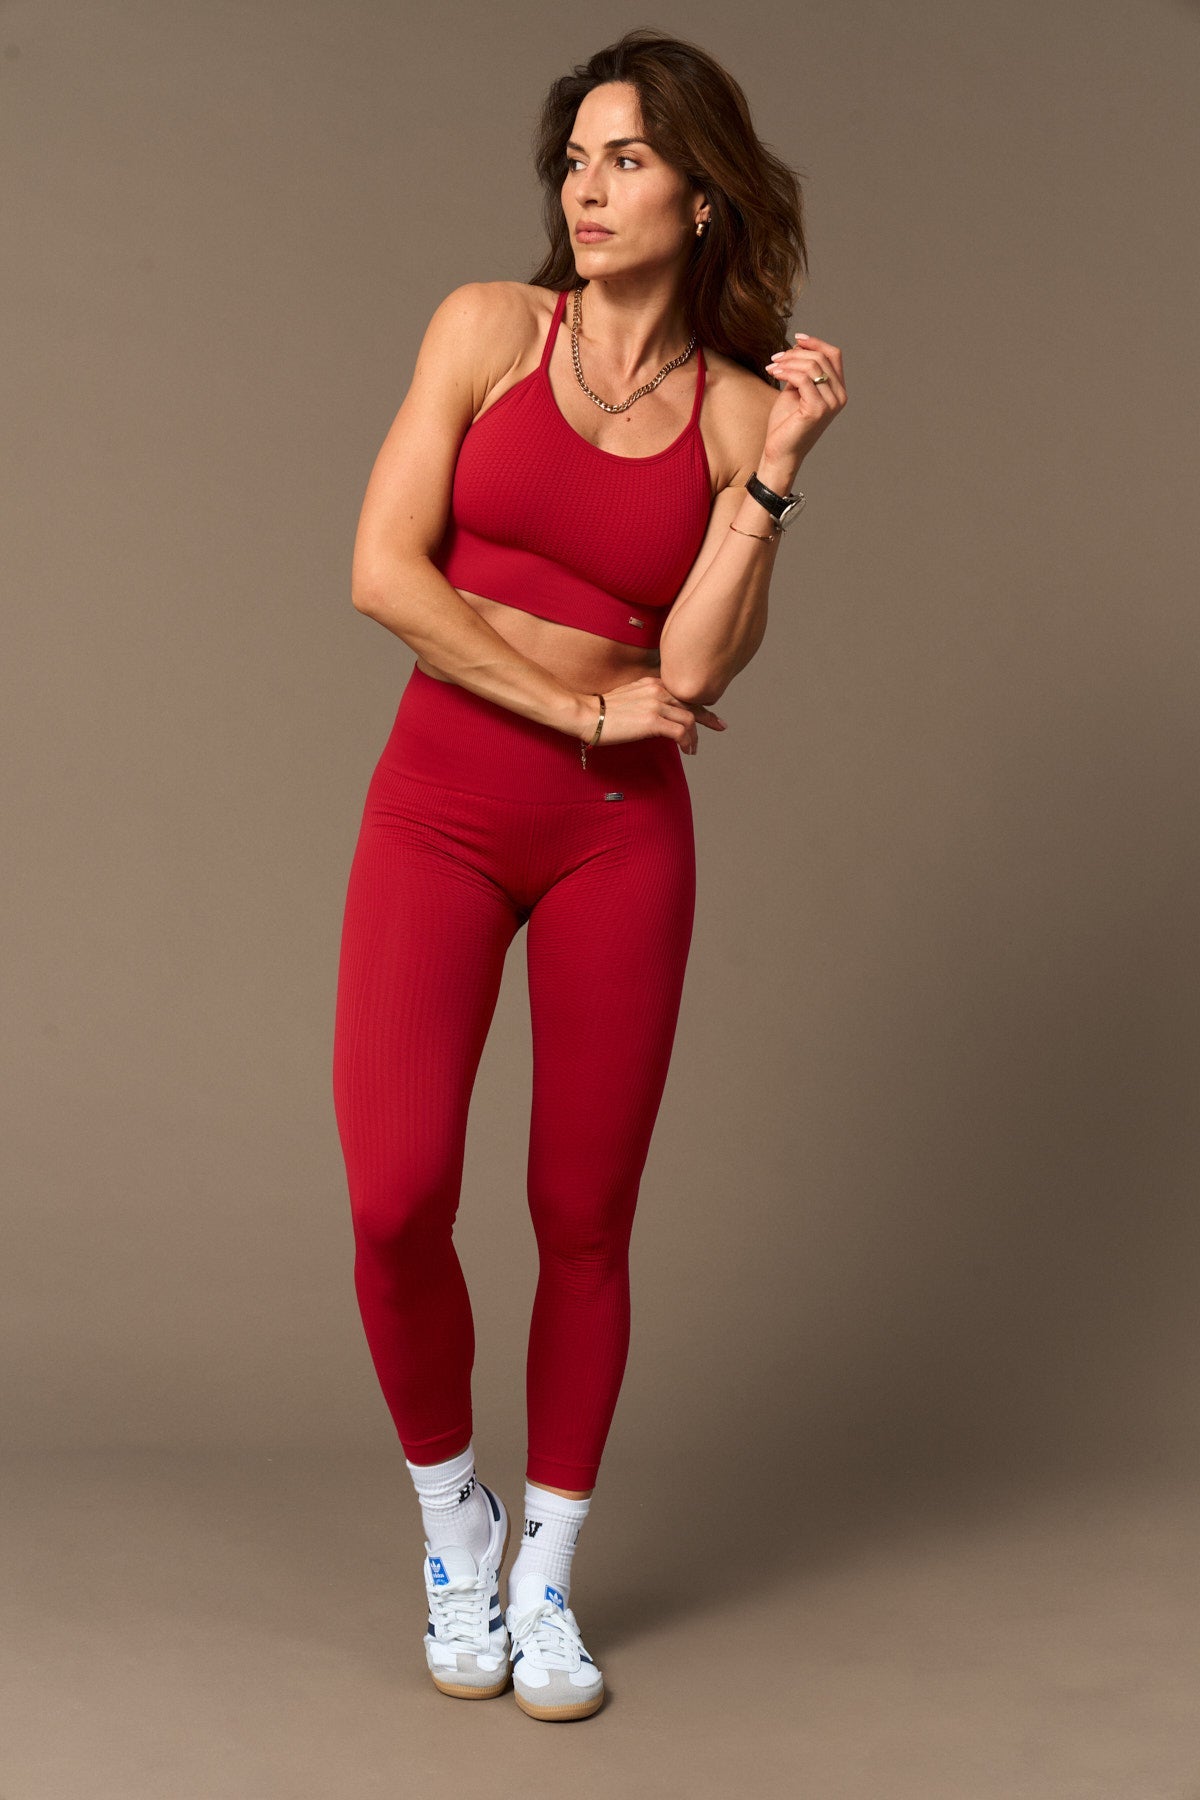 Vinyasa Bra Rouge-Bras-Tienda Ropa Leggings Yoga Sostenibles Reciclados Mujer On-line Barcelona Believe Athletics Sustainable Recycled Yoga Clothes